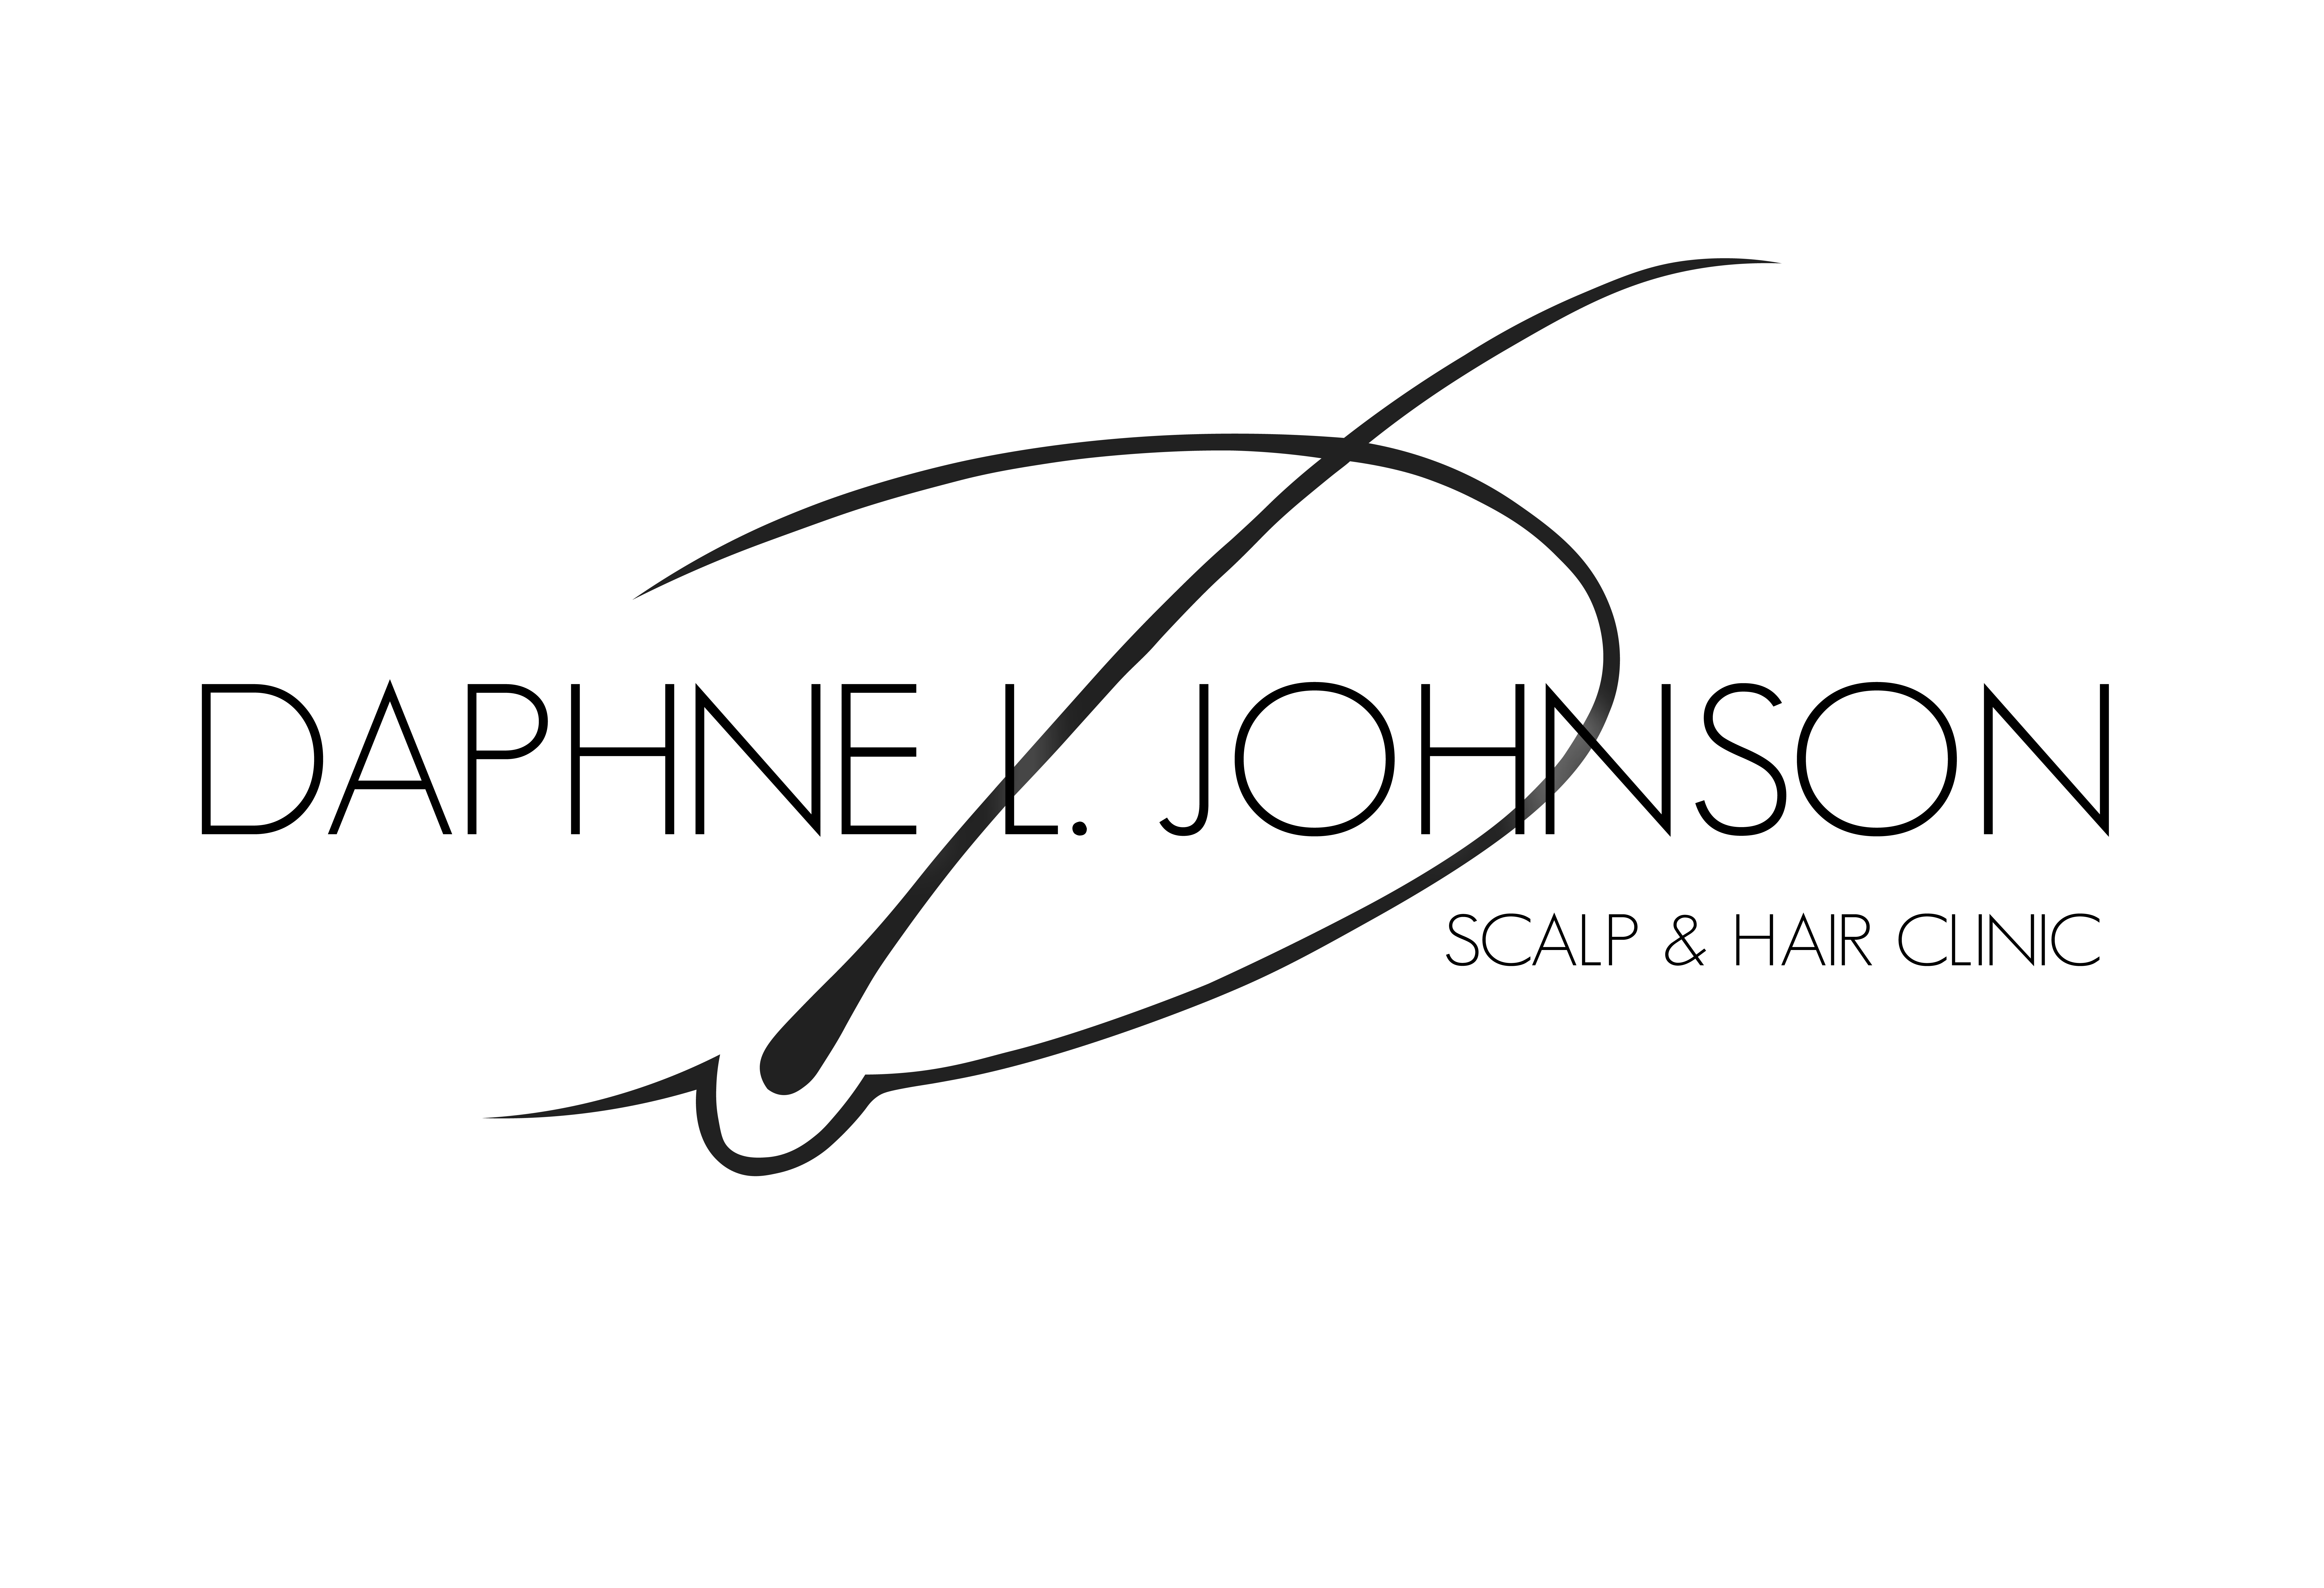 Daphne L Johnson Scalp & Hair Clinic